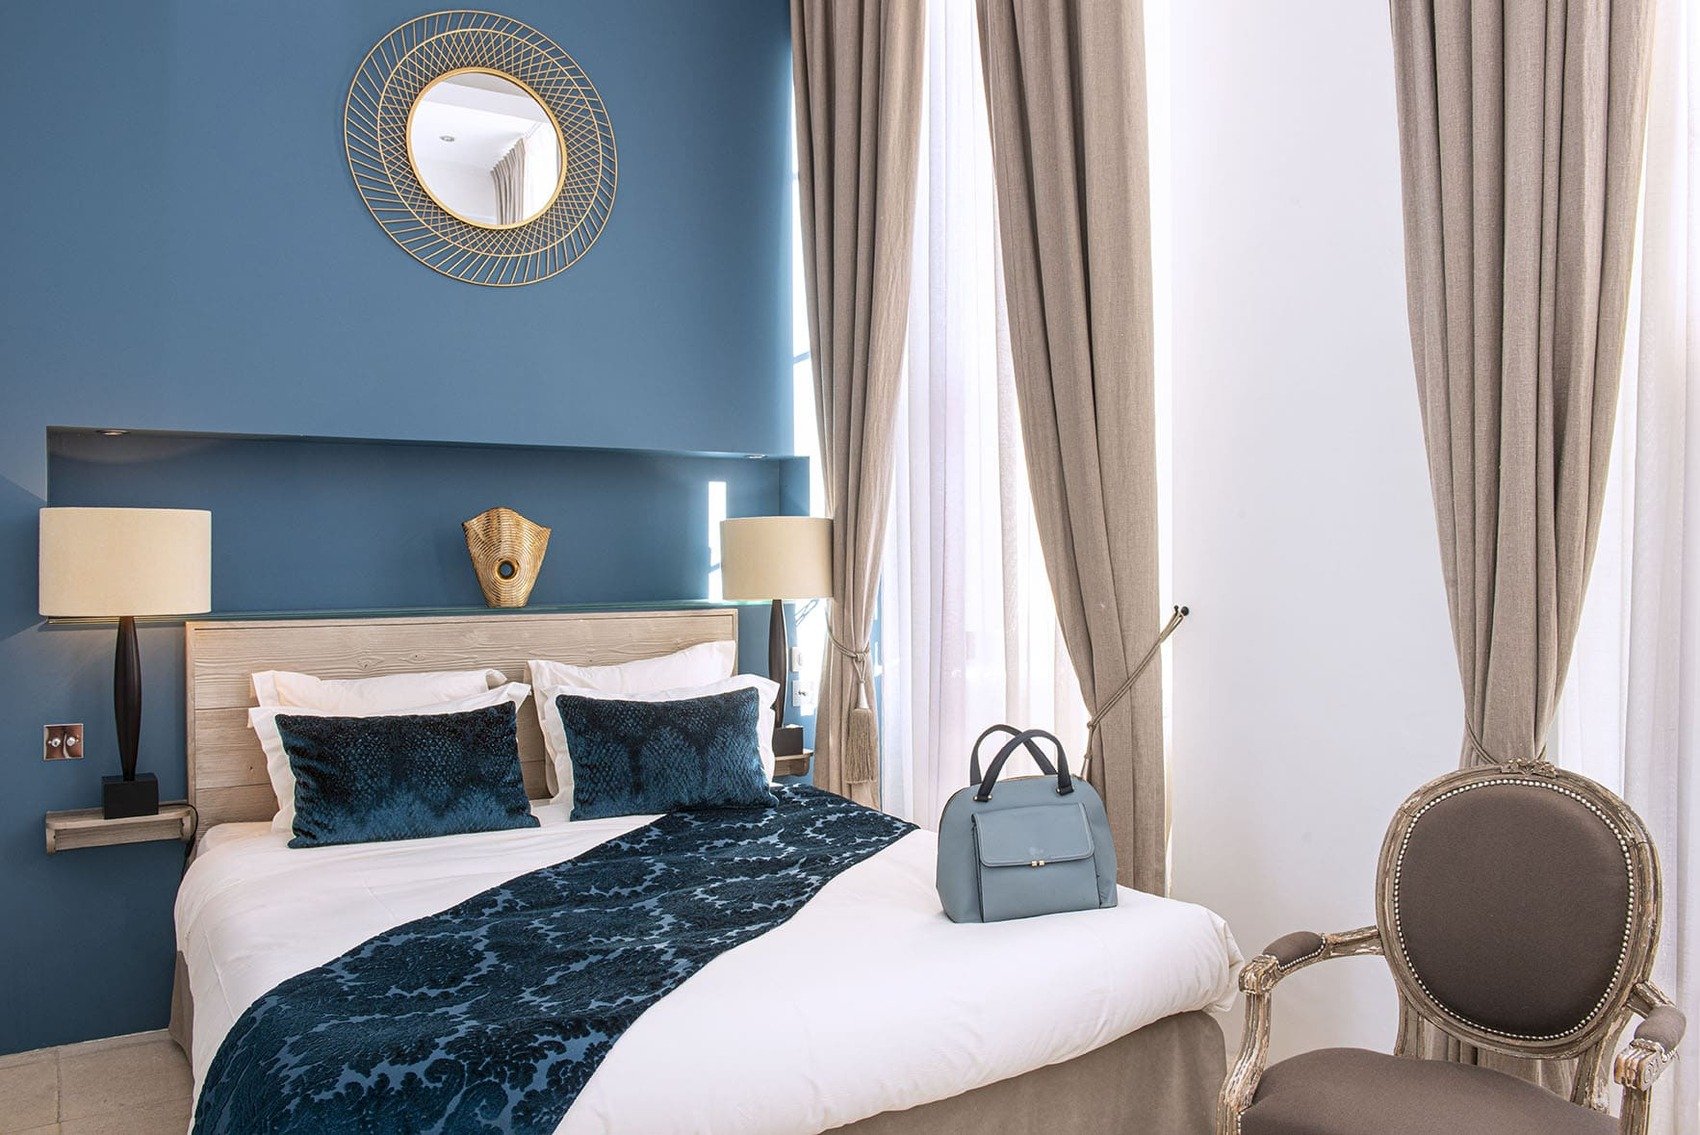 Luxury hotel in Provence, France - Château de Massillan 5* - Chef Mickael Furnion - Michelin-starred restaurant Le M - Suite Room